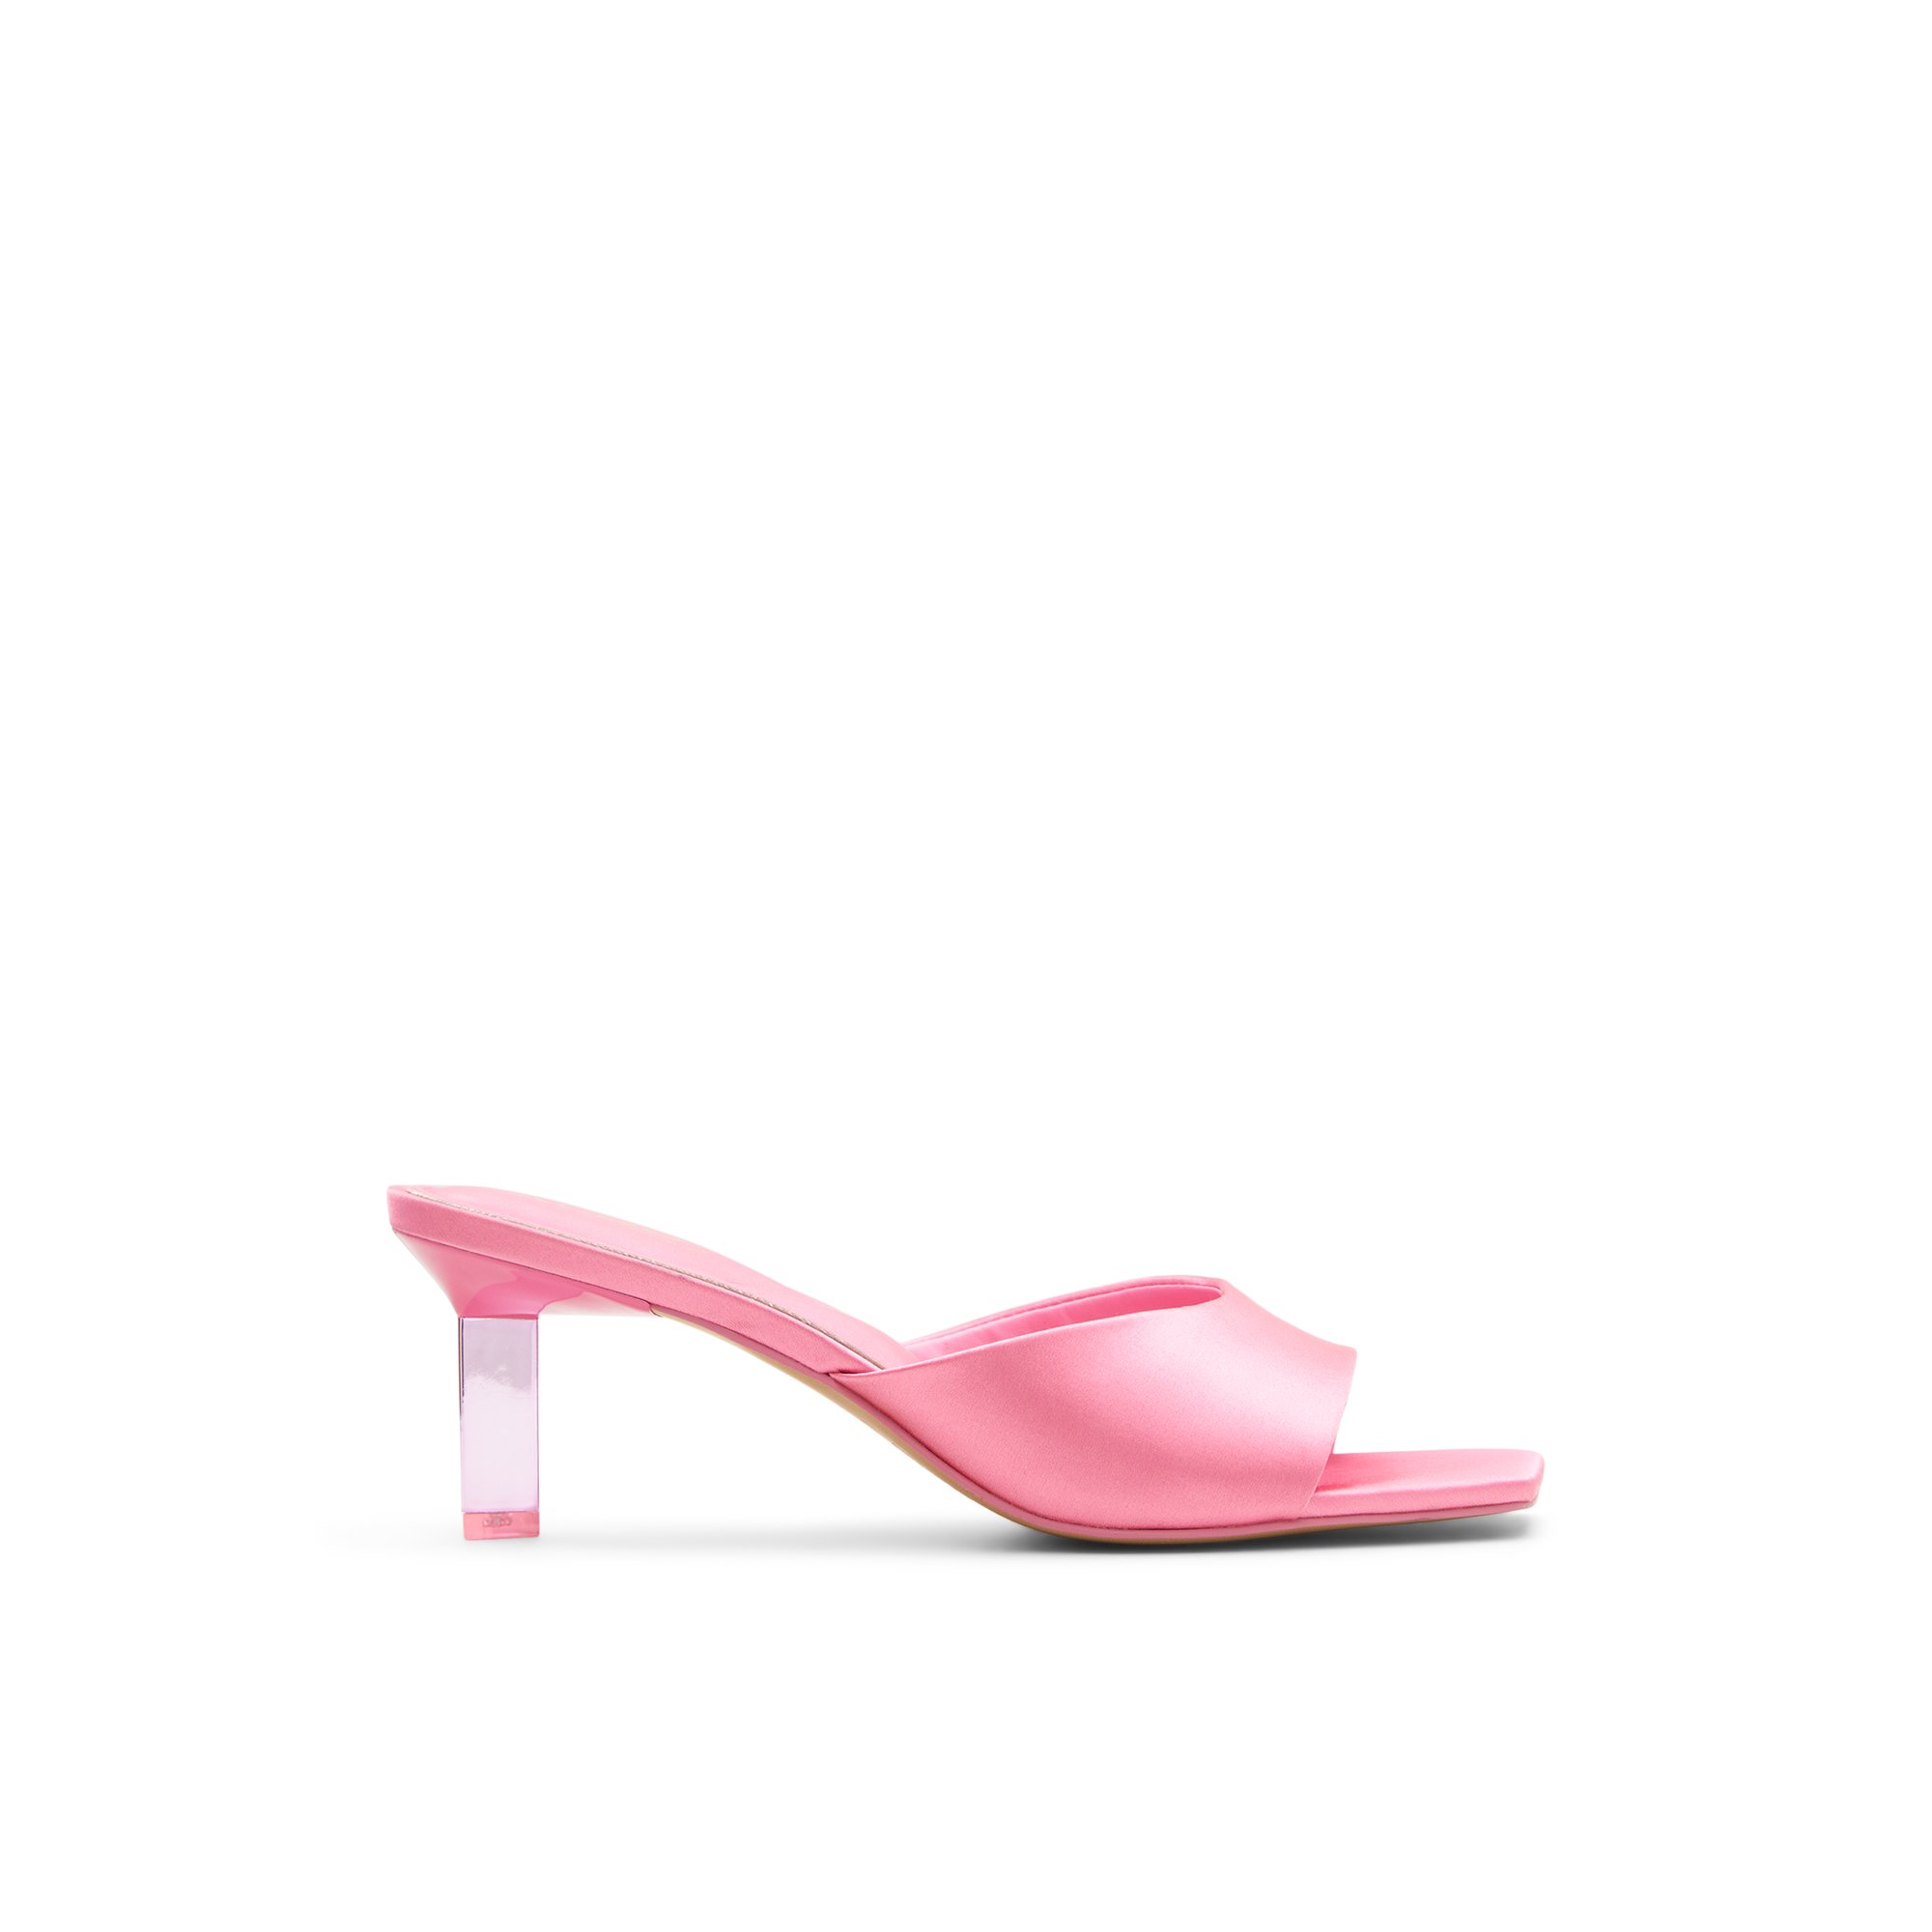 ALDO Posie - Women's Mule Slides - Pink